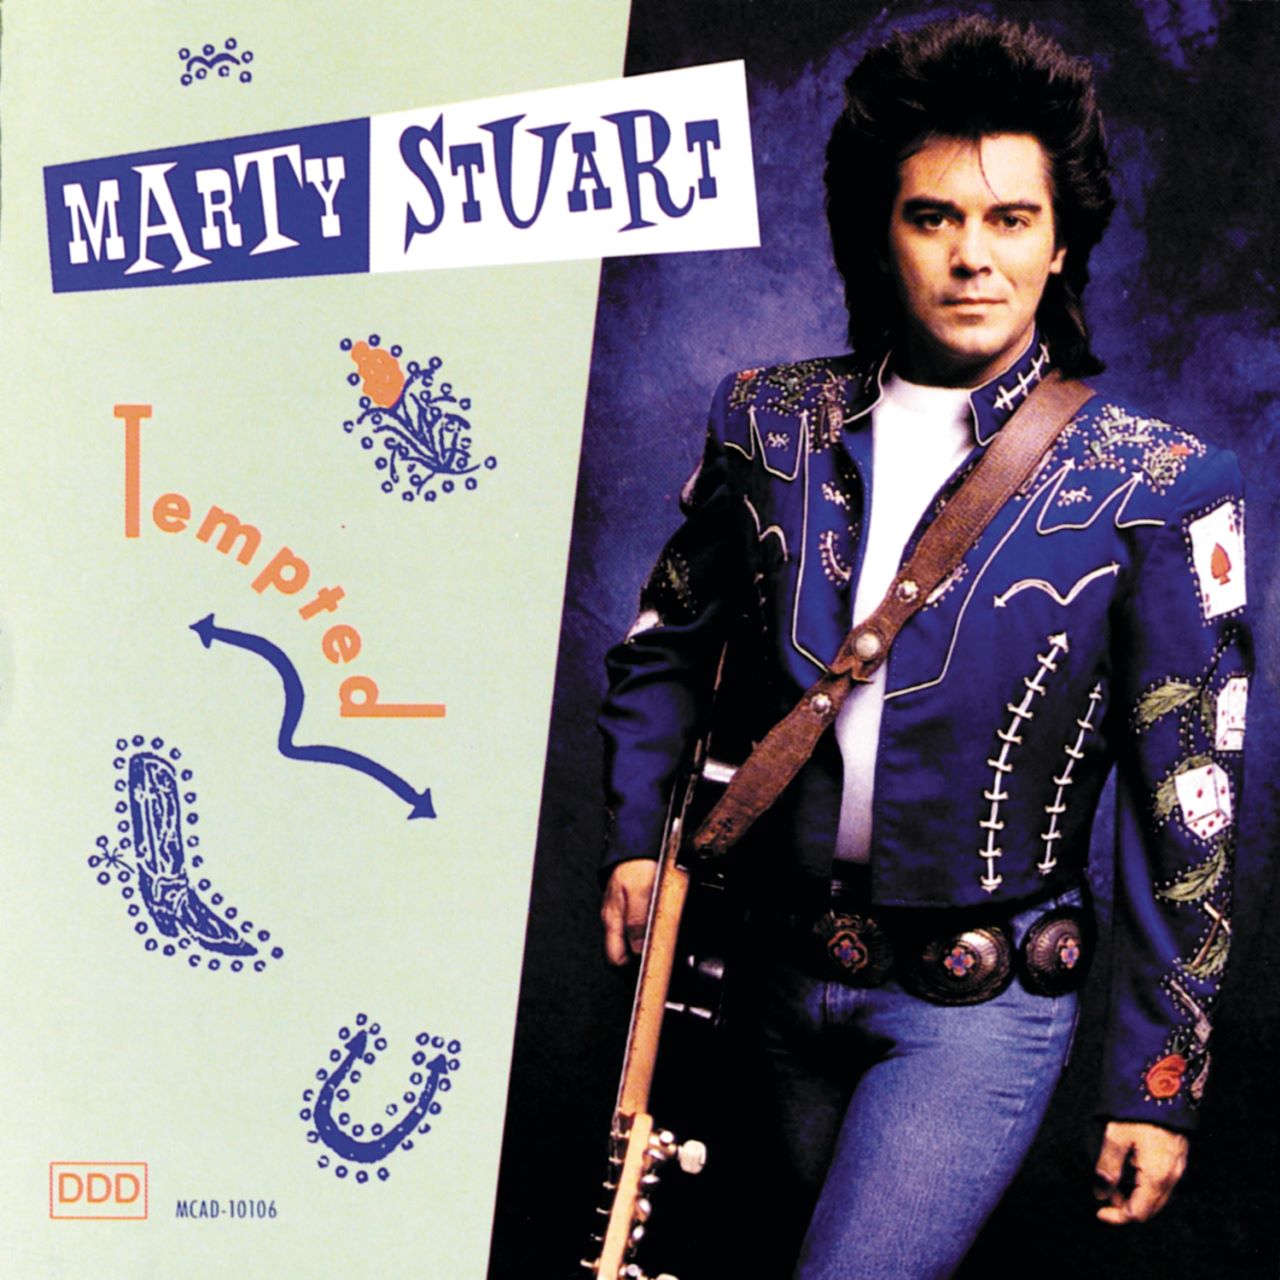 Marty Stuart - Tempted cover album